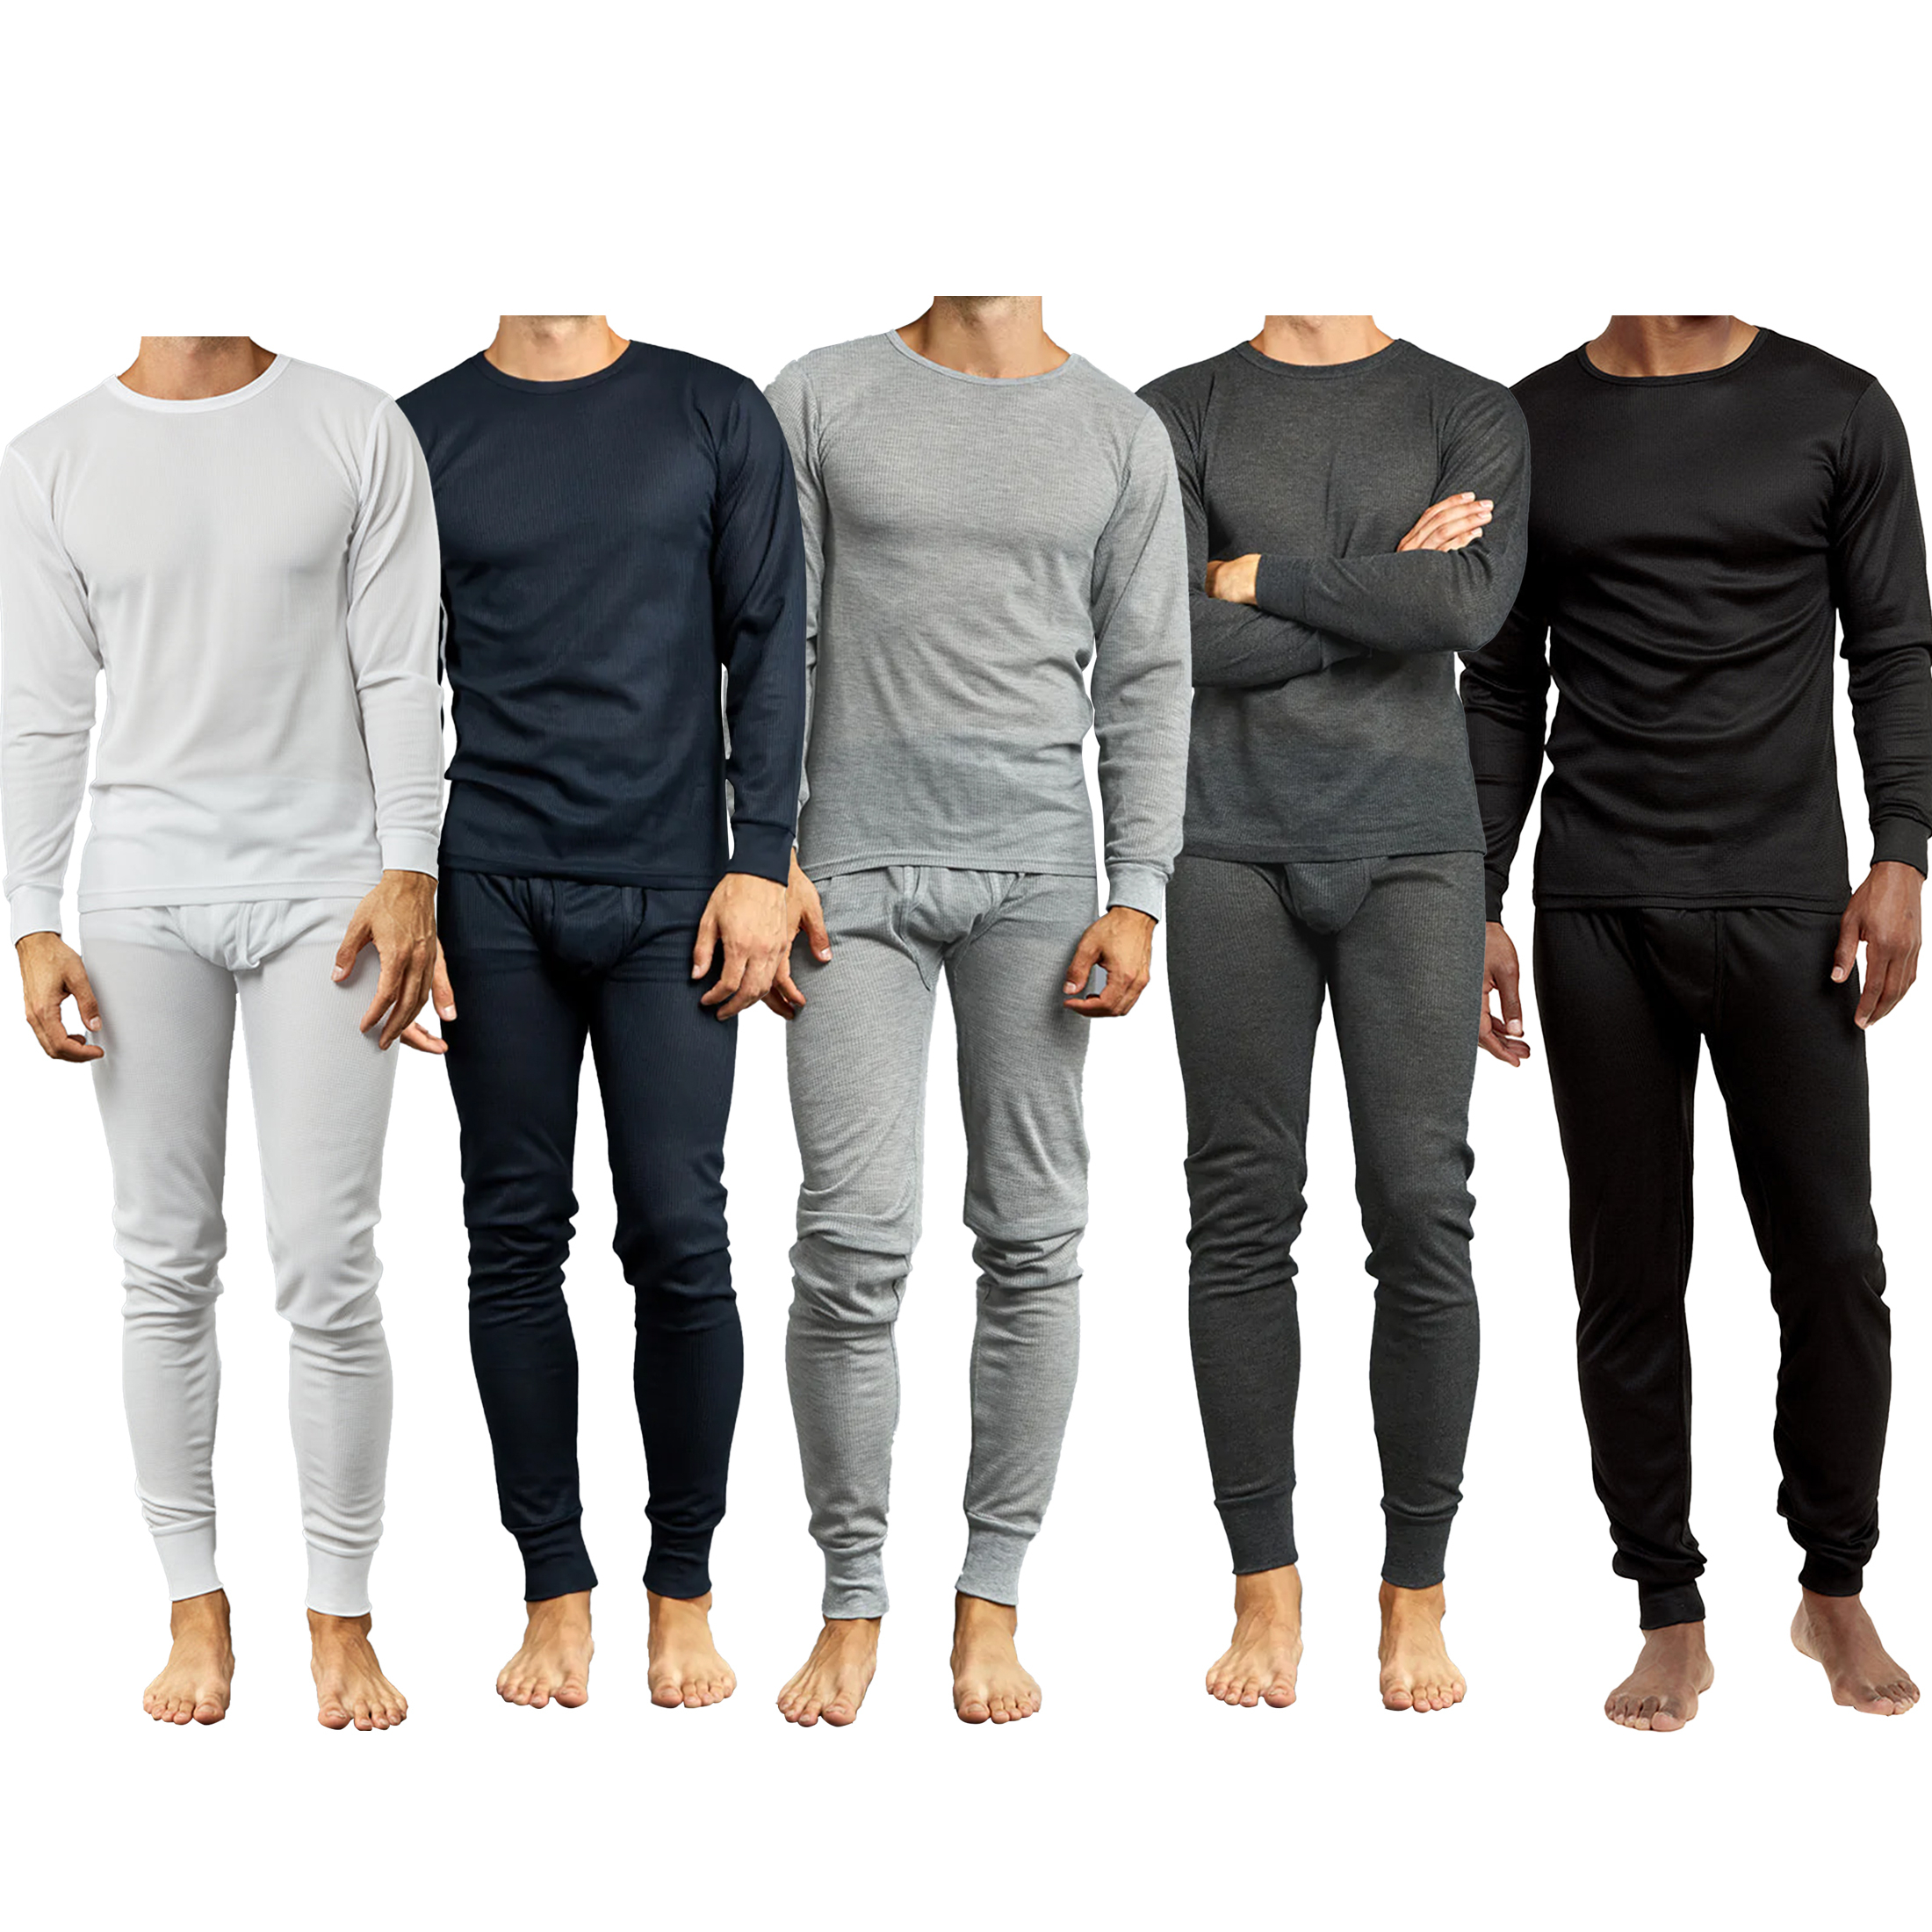 2-Piece: Men's Moisture Wicking Long Johns Base Layer Thermal Underwear Set (Top & Bottom) - White, 2X-Large